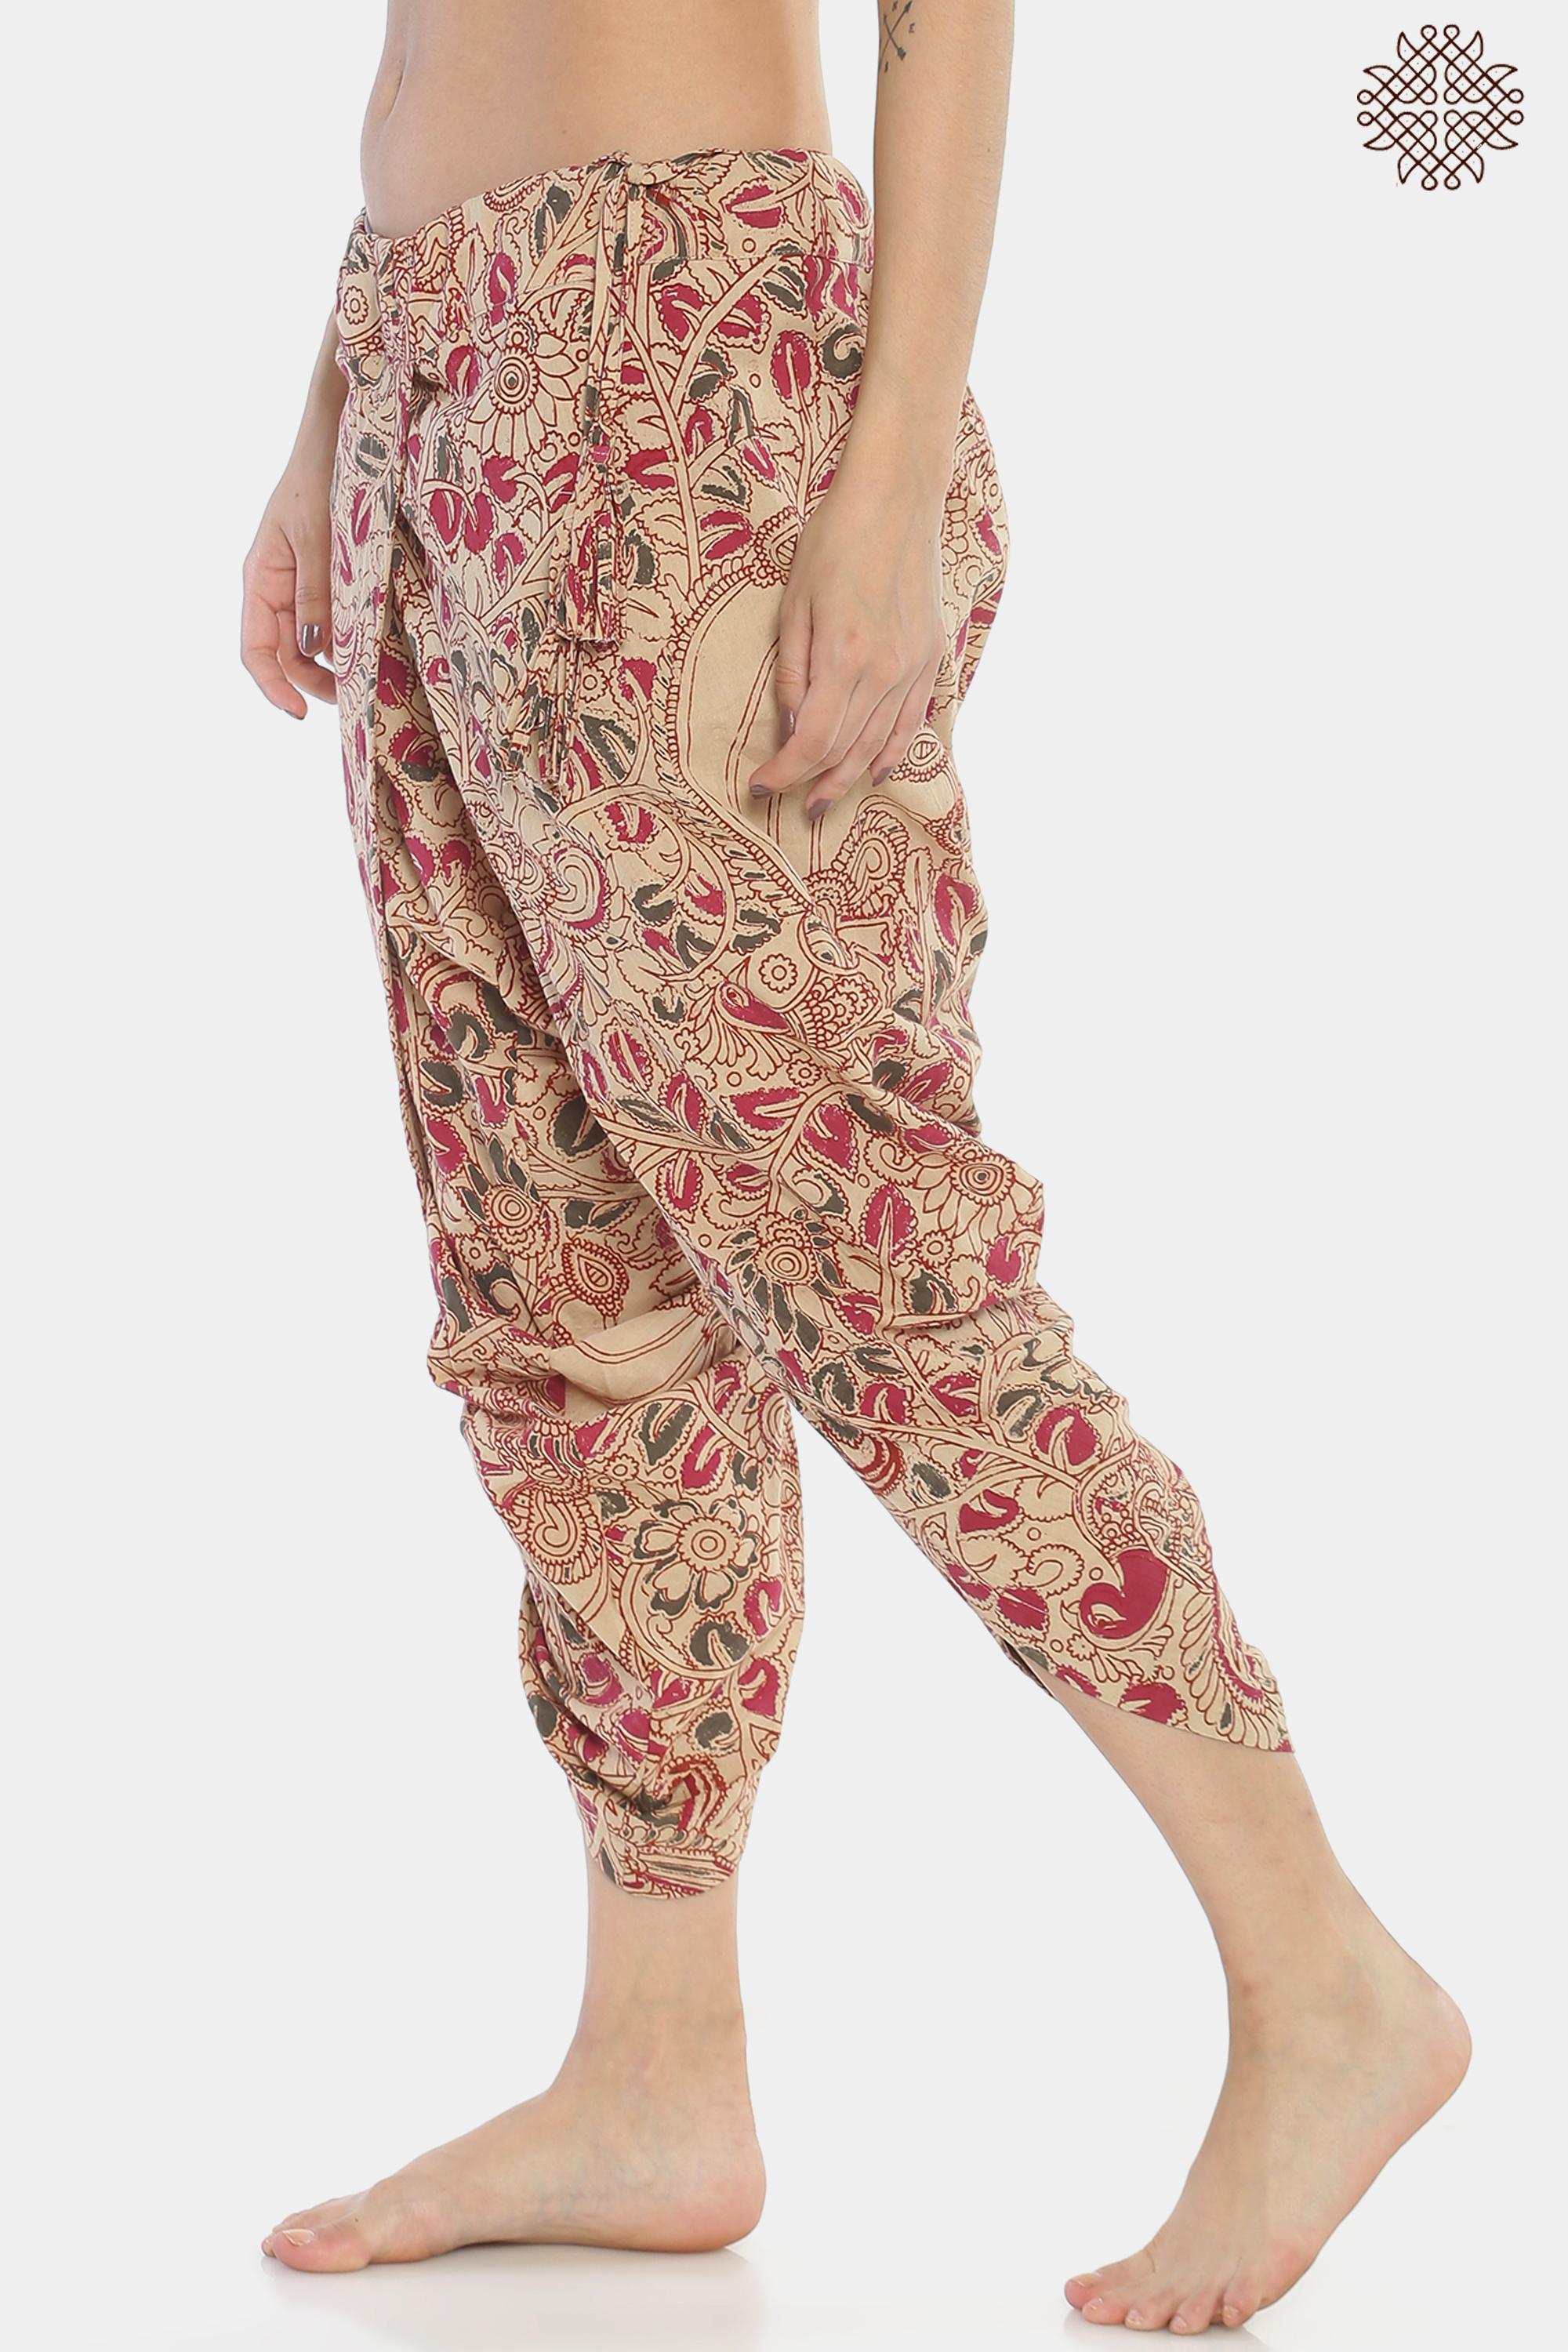 Ensemble modal cotton elasticated panelled kalamkari border skirt 1  Shop  Online For Best Womens Clothing  Ethnic Wear